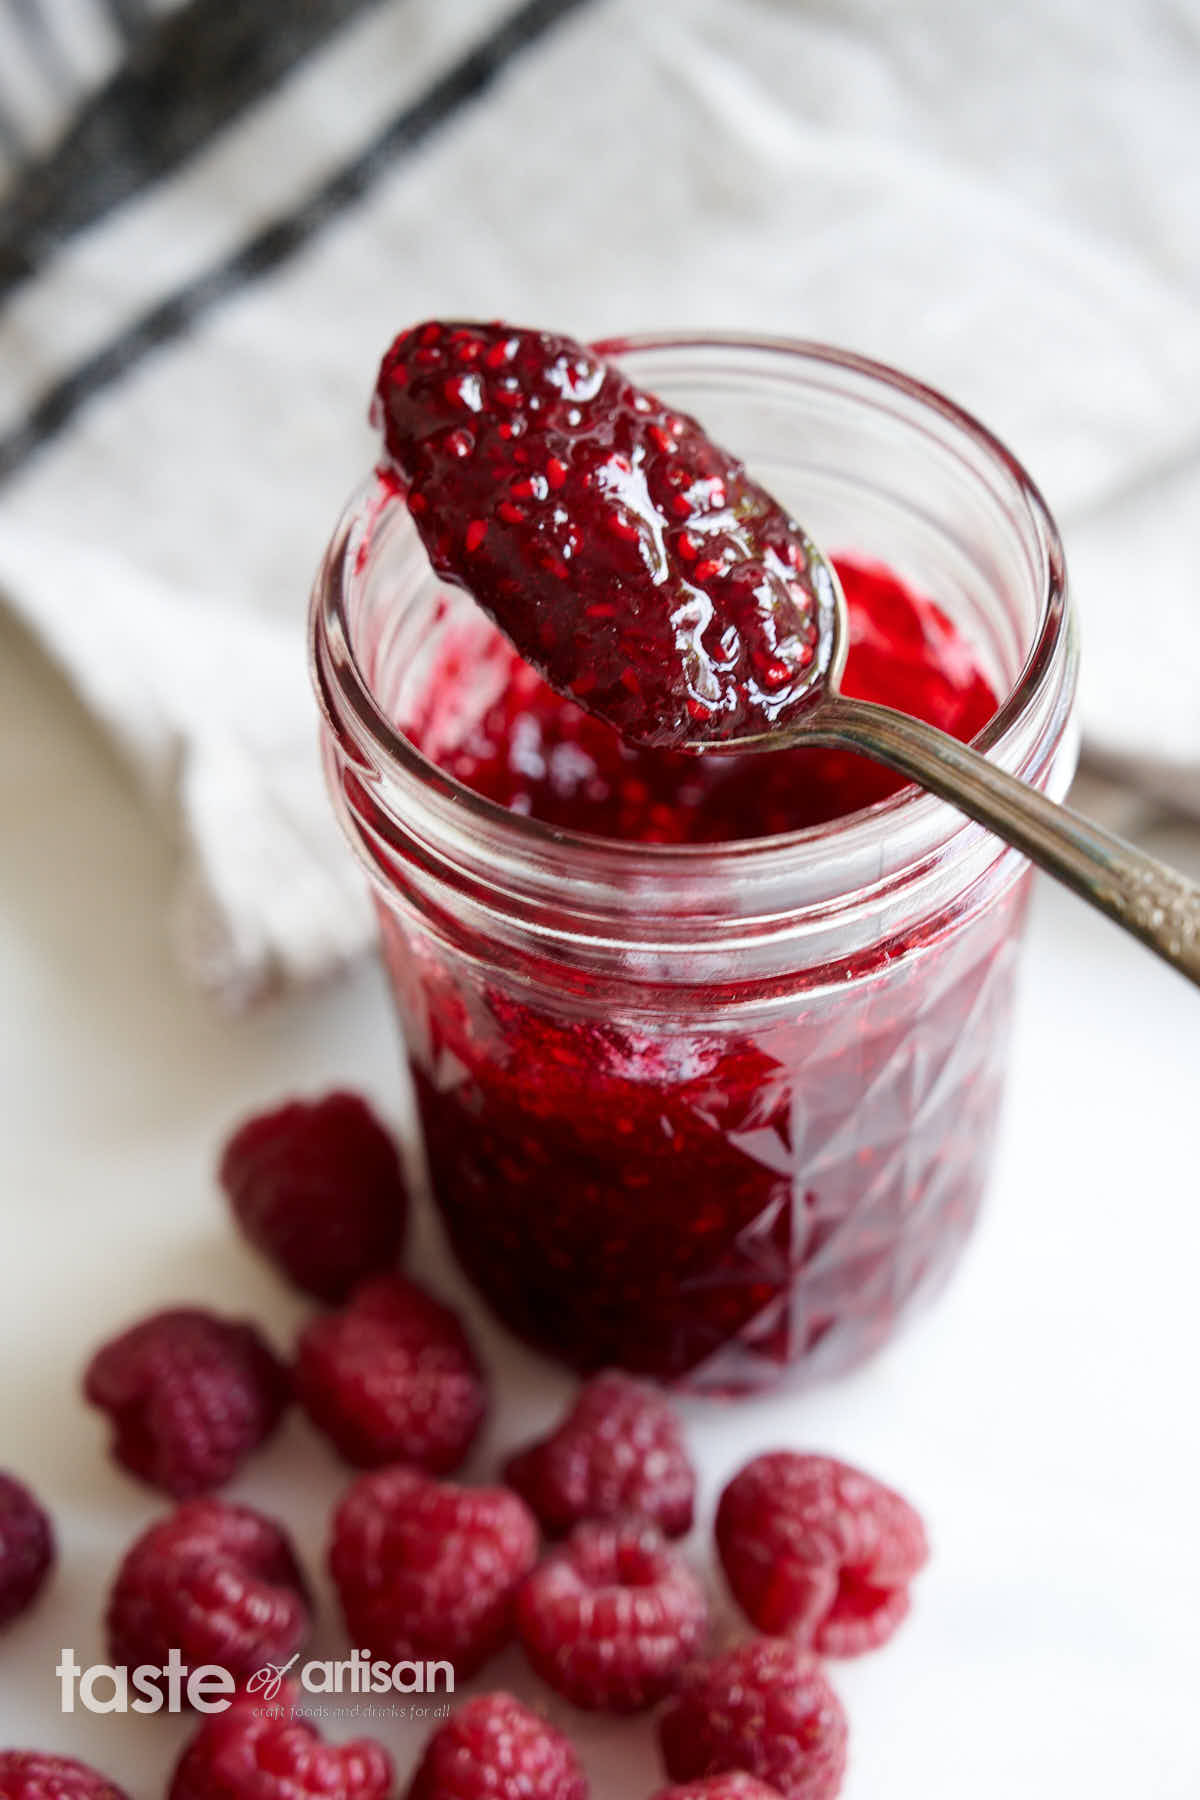 Homemade raspberry jam, using traditional raspeberry jam recipe.